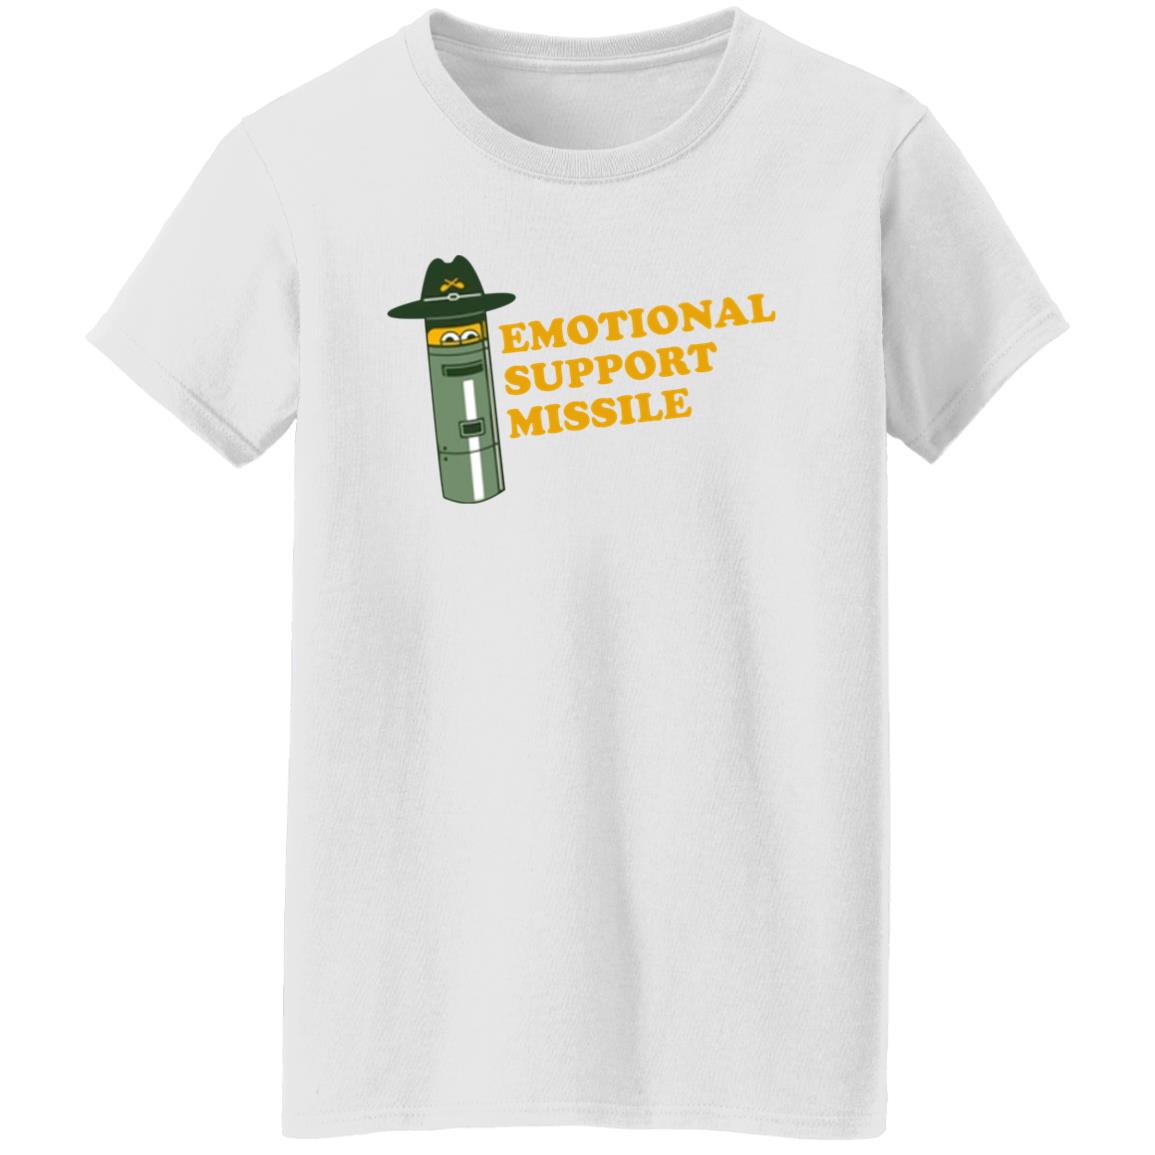 Nicholas Moran Emotional Support Missile Shirt Everpress Store